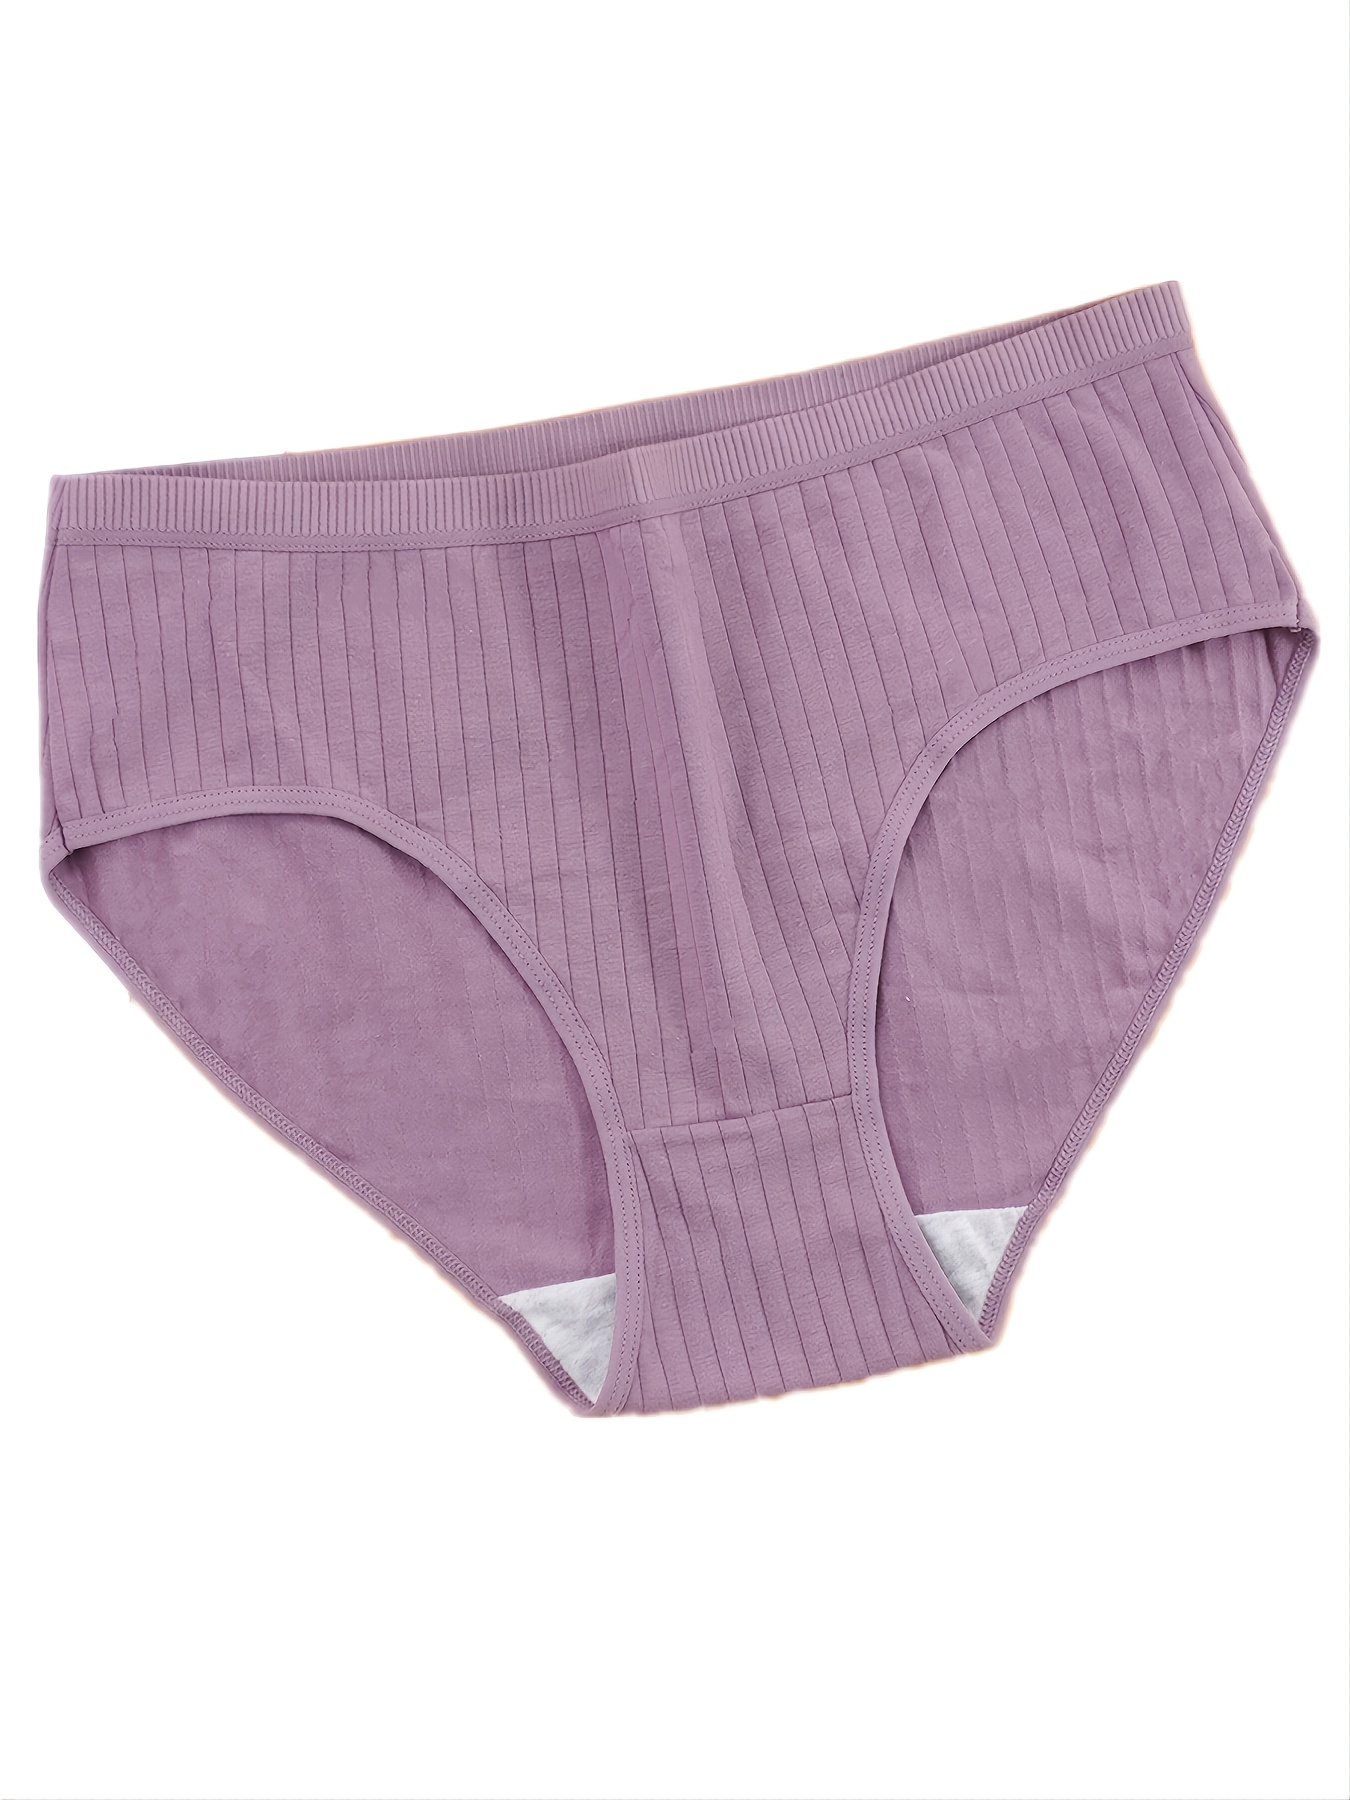 VS pink cotton ribbed thong Panty NEW SIZE medium purple